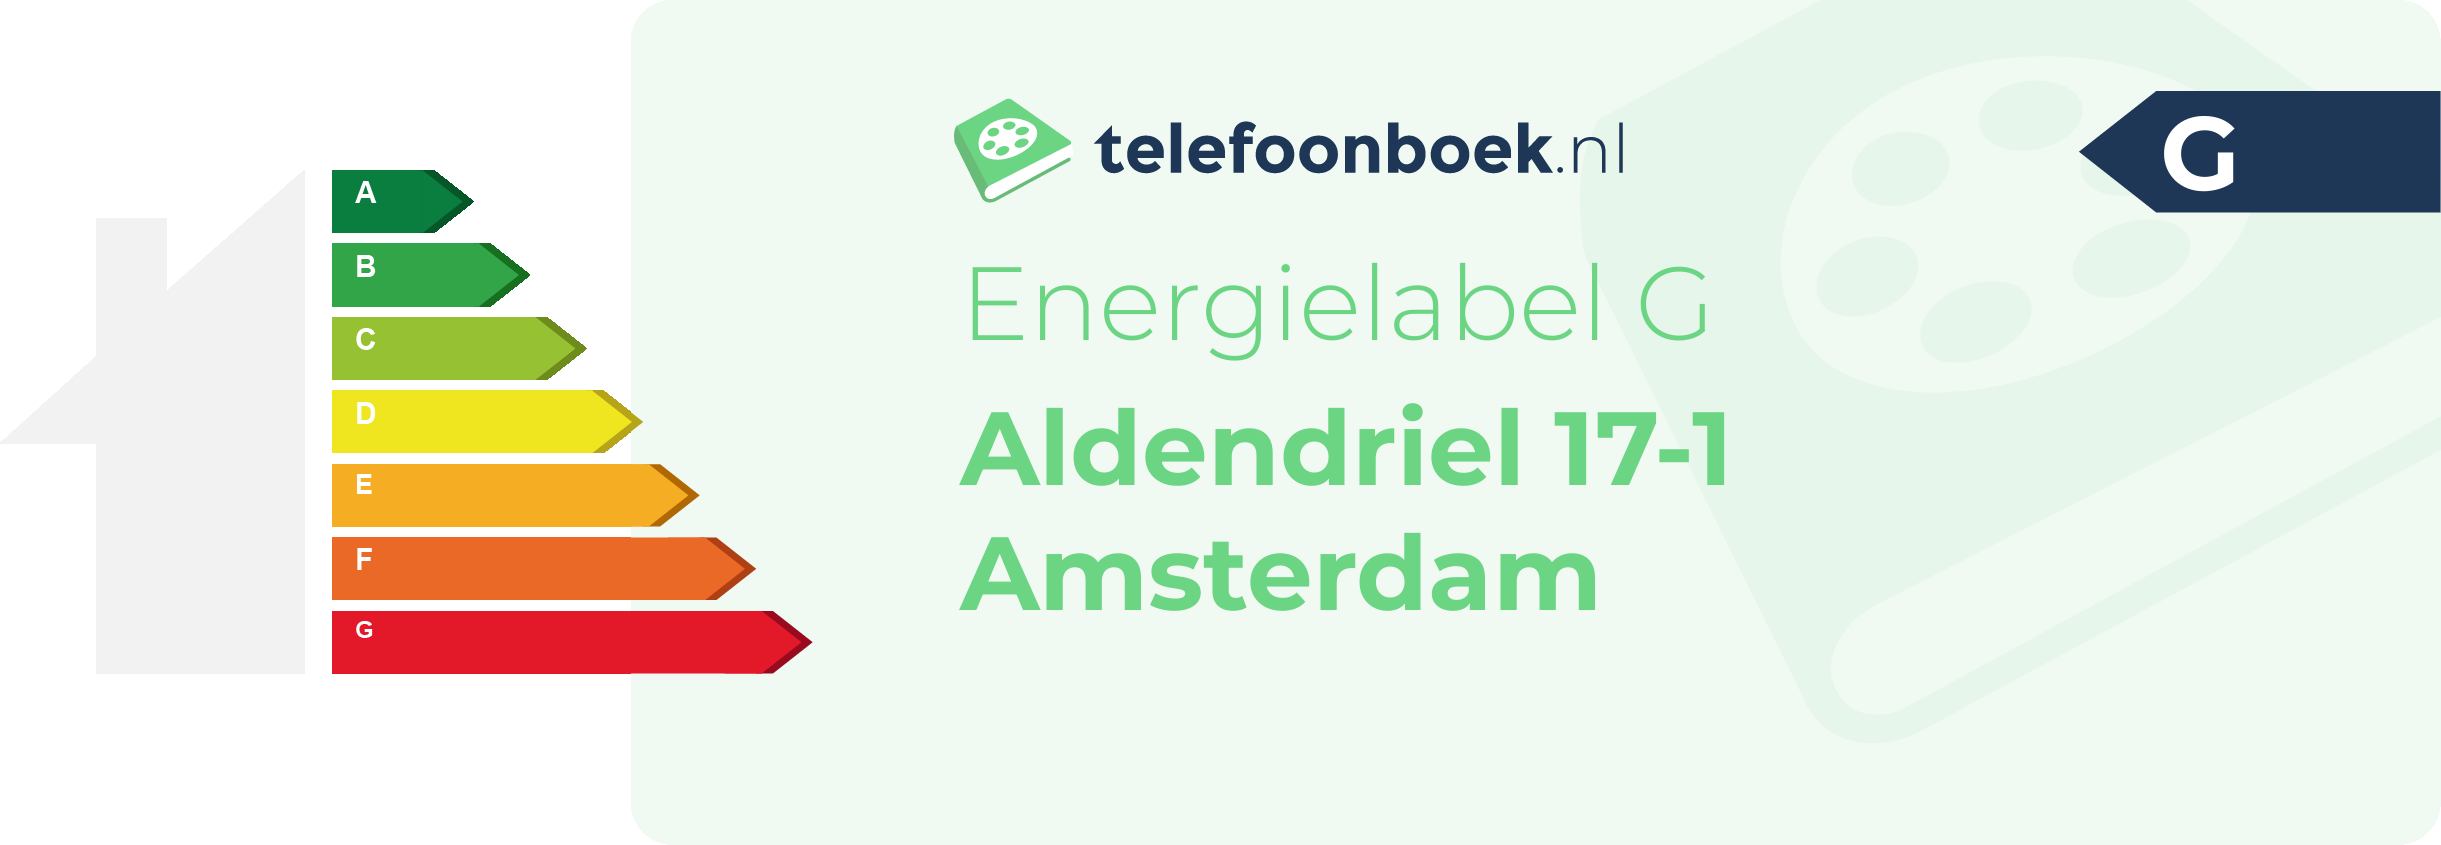 Energielabel Aldendriel 17-1 Amsterdam